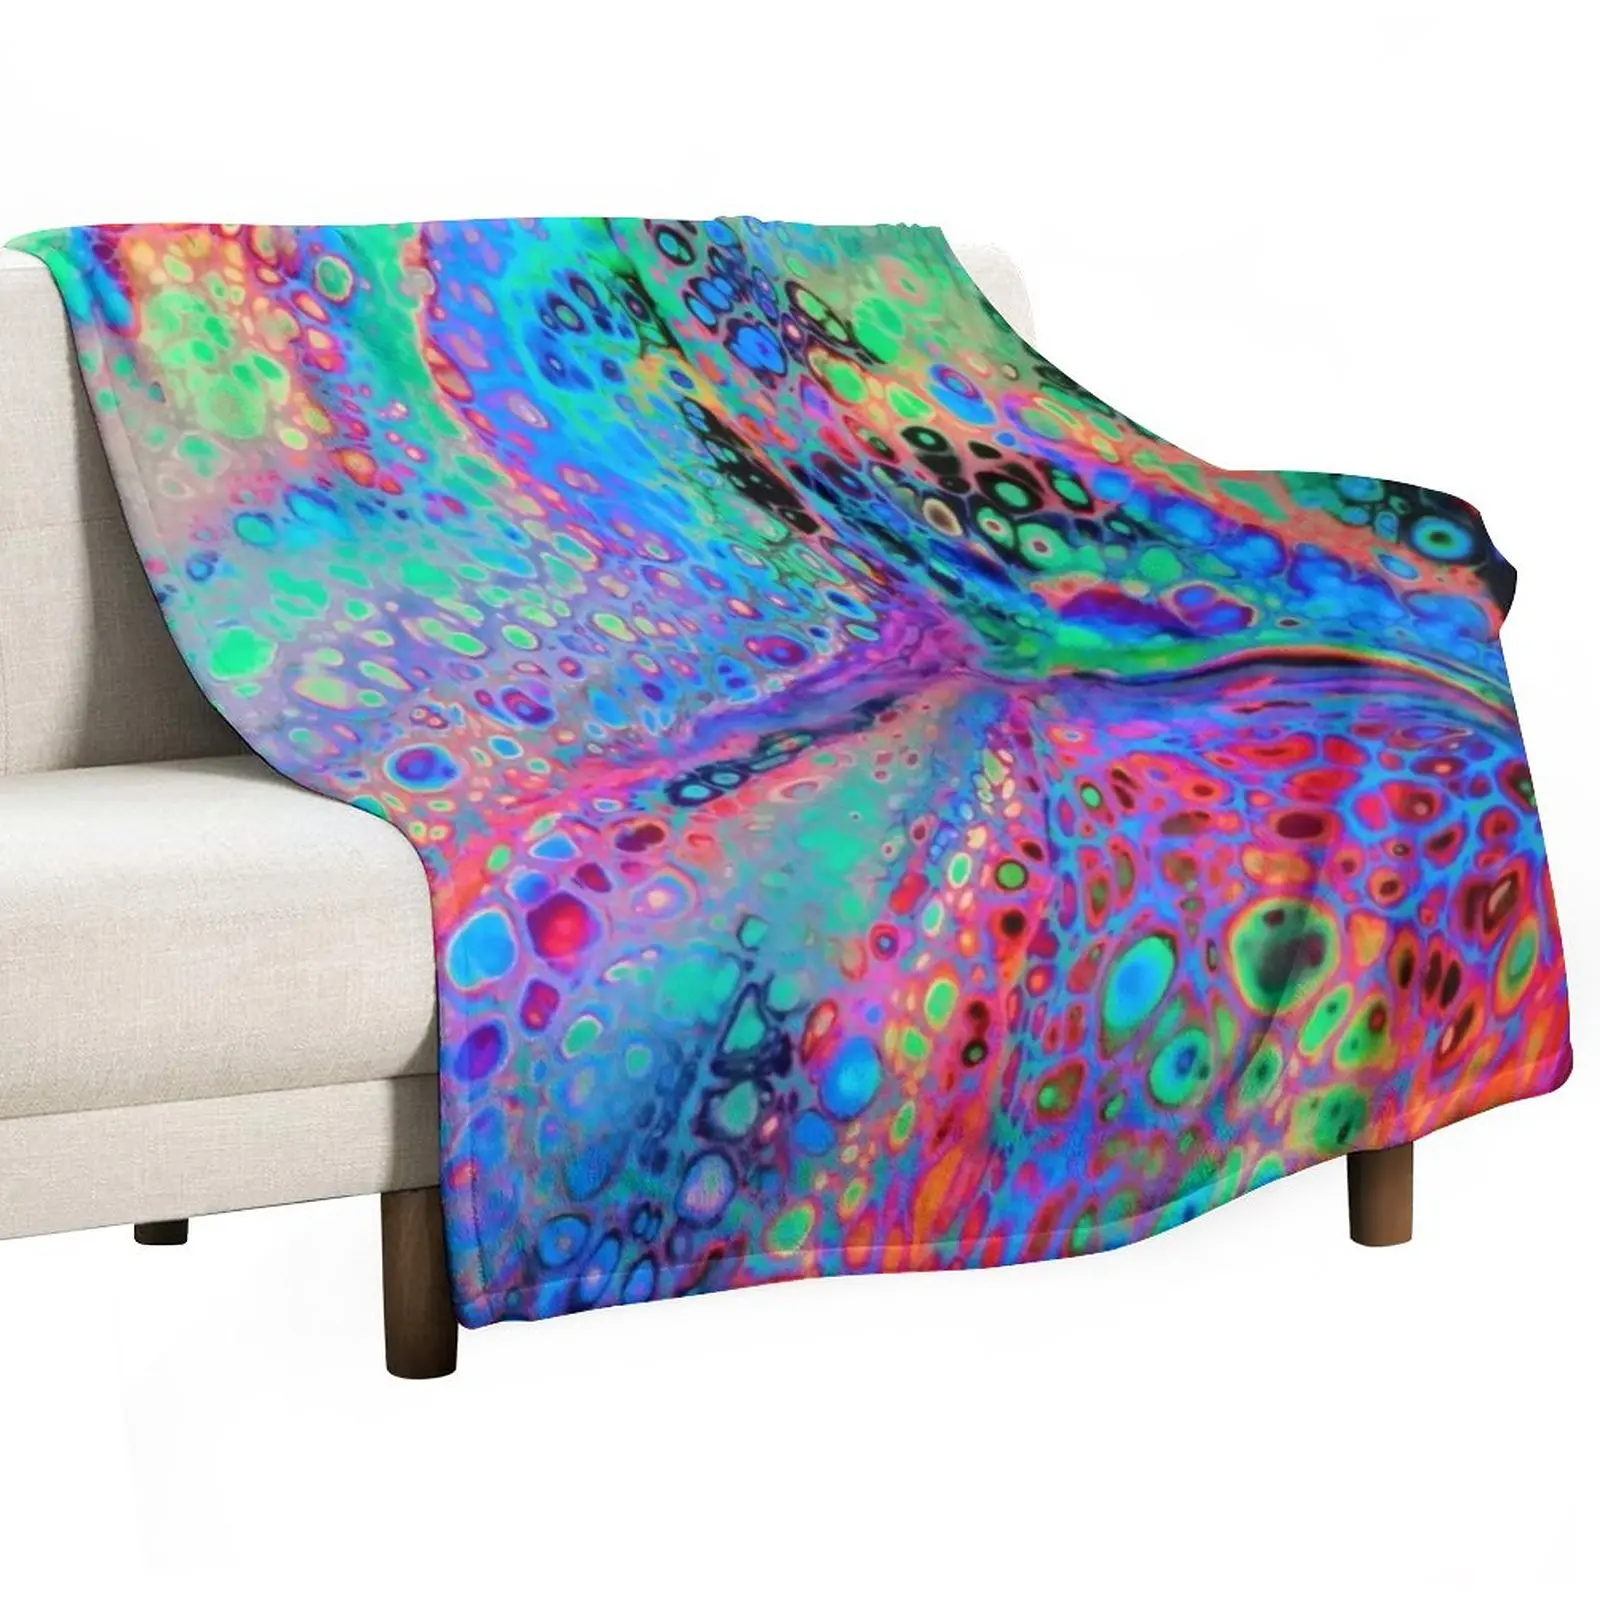 

Electric Leopard Pattern Super Fluid Soul Acrylic Pour Design Throw Blanket Thins Decorative Sofas Blankets